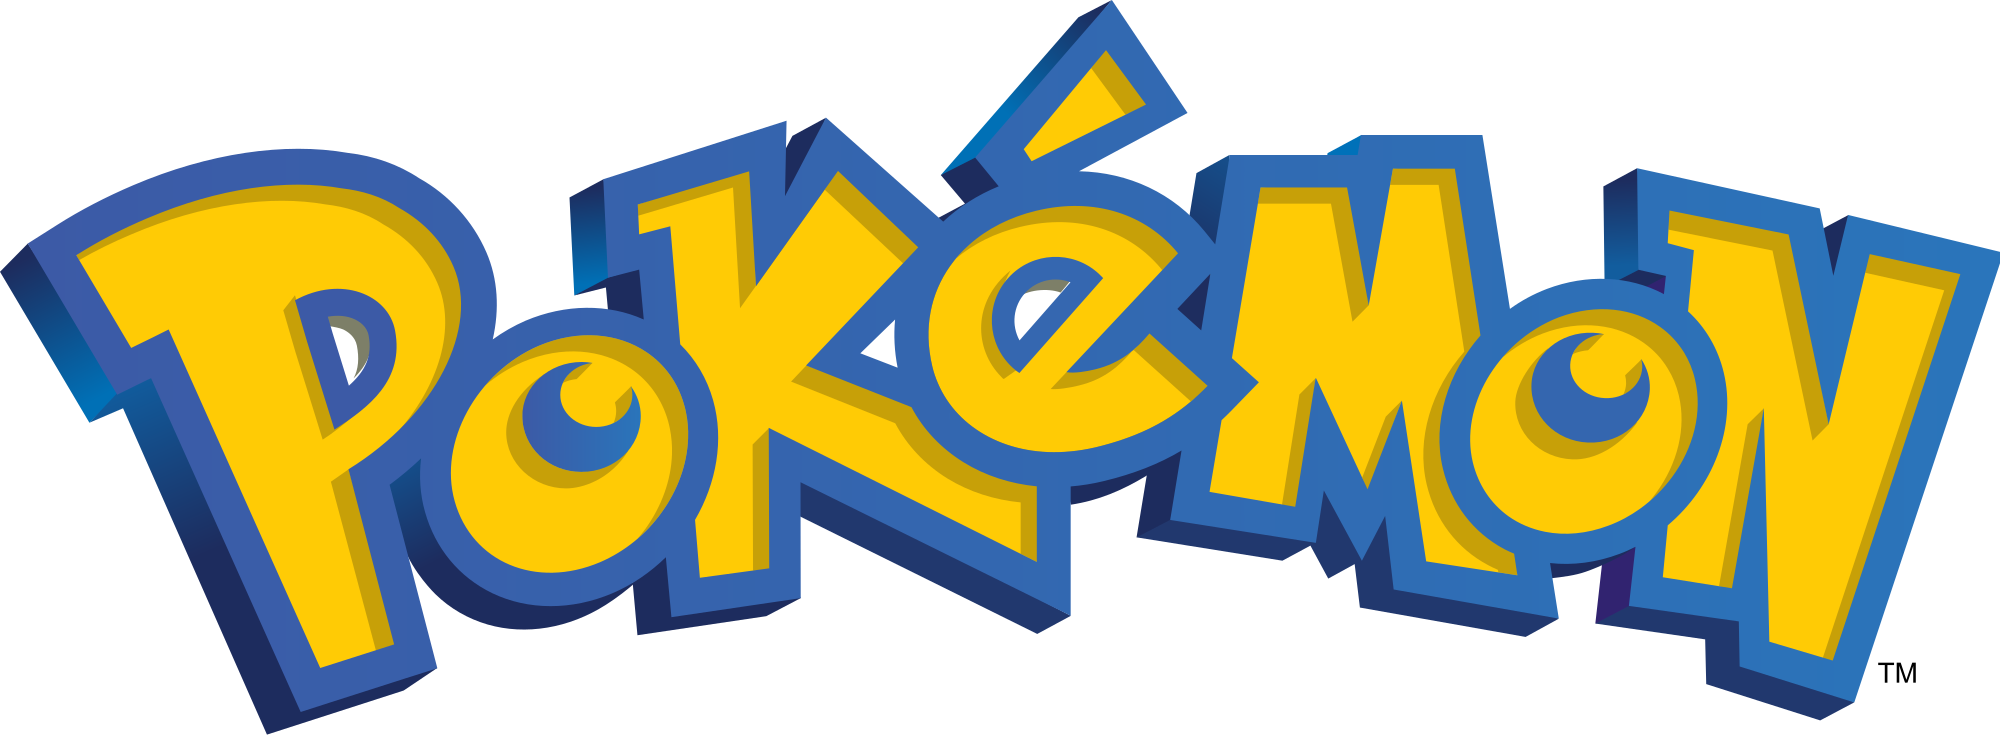 pokemon_logo_PNG3.png